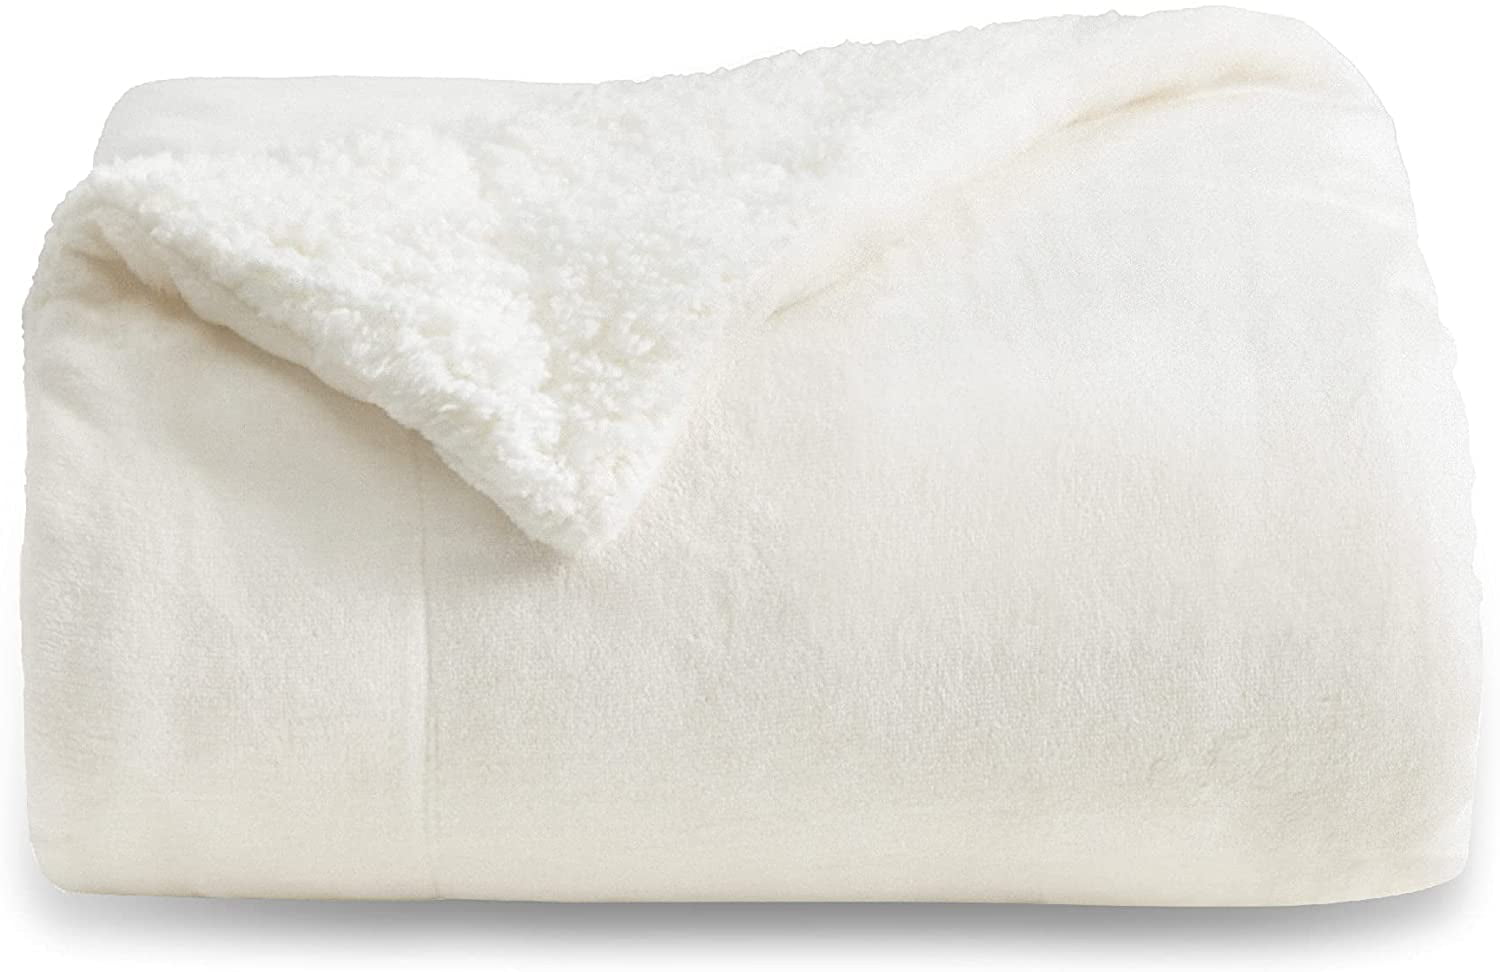 Bedsure Sherpa Fleece Blanket Twin Size Black Plush Throw Blanket Fuzzy Soft 